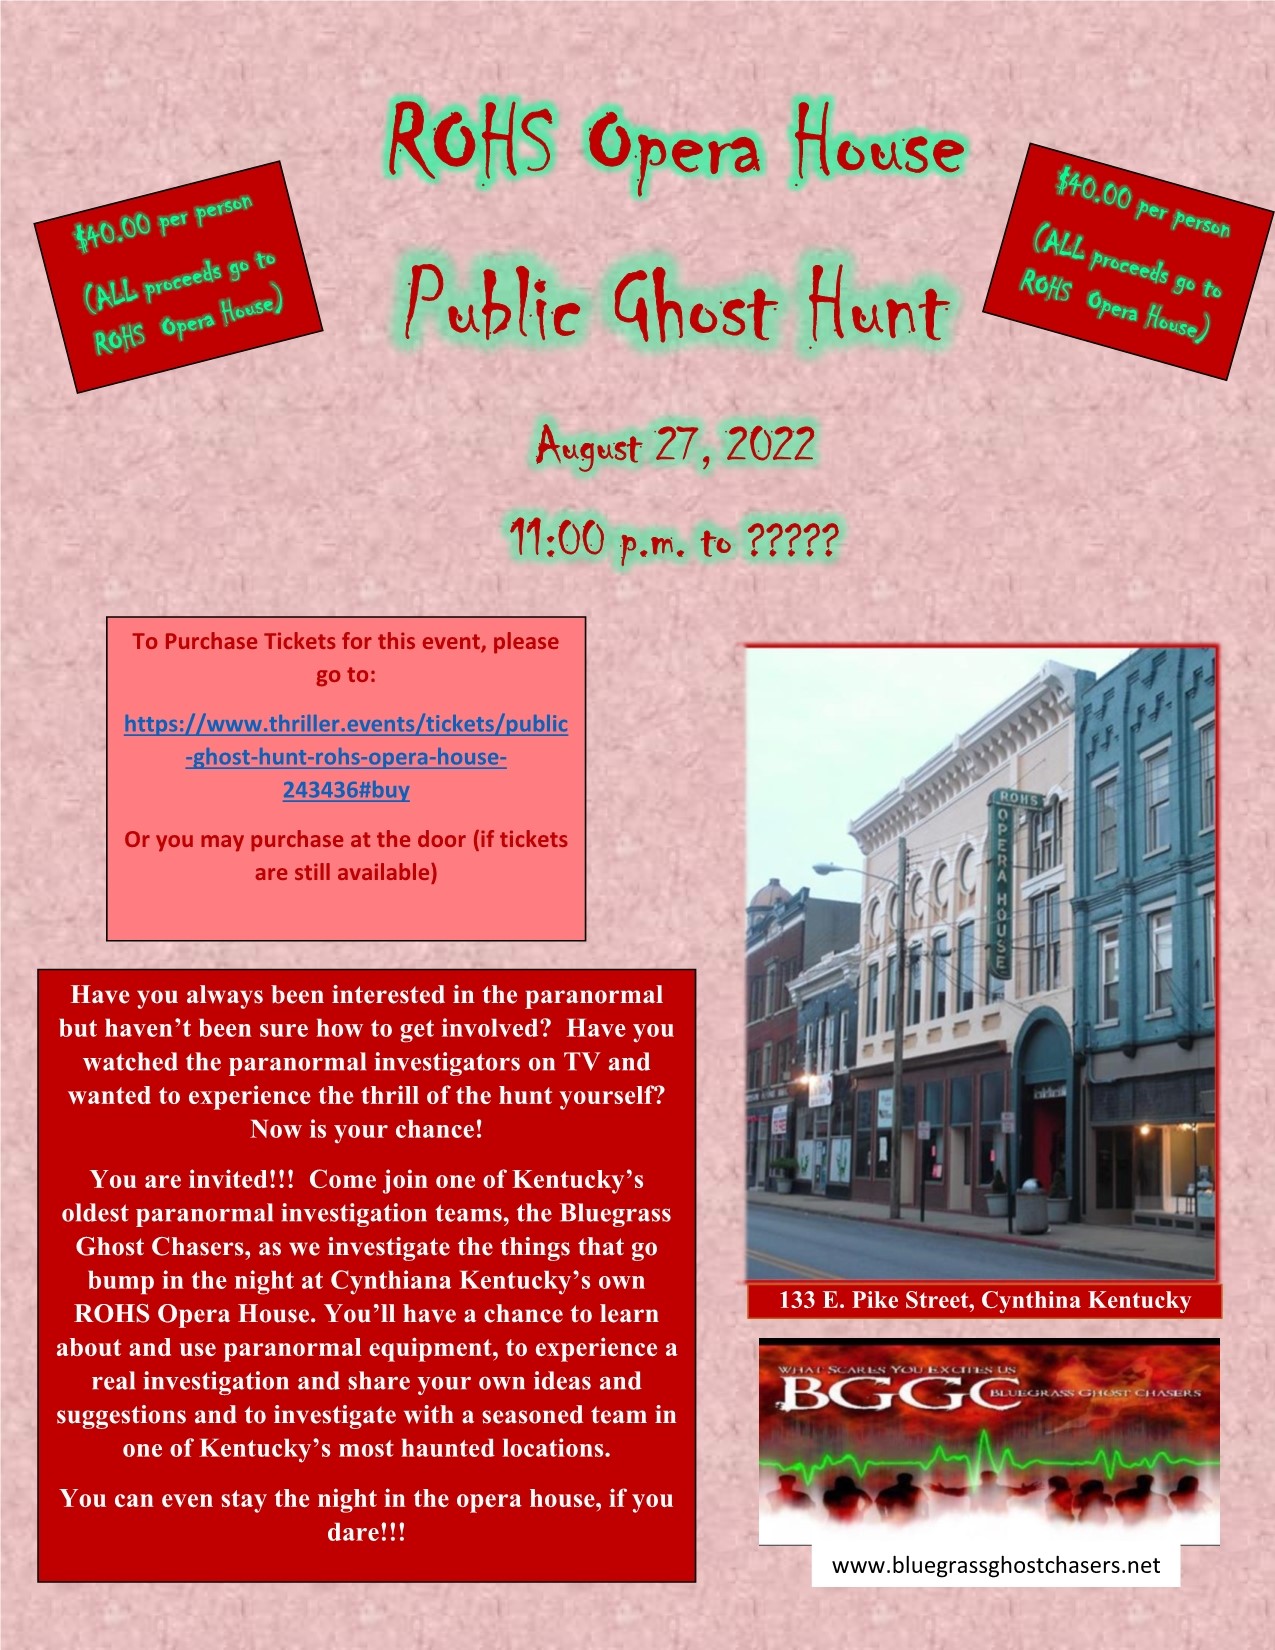 Public Ghost Hunt @ ROHS Opera House  on Aug 27, 23:00@ROHS Opera House - Compra entradas y obtén información enThriller Events thriller.events